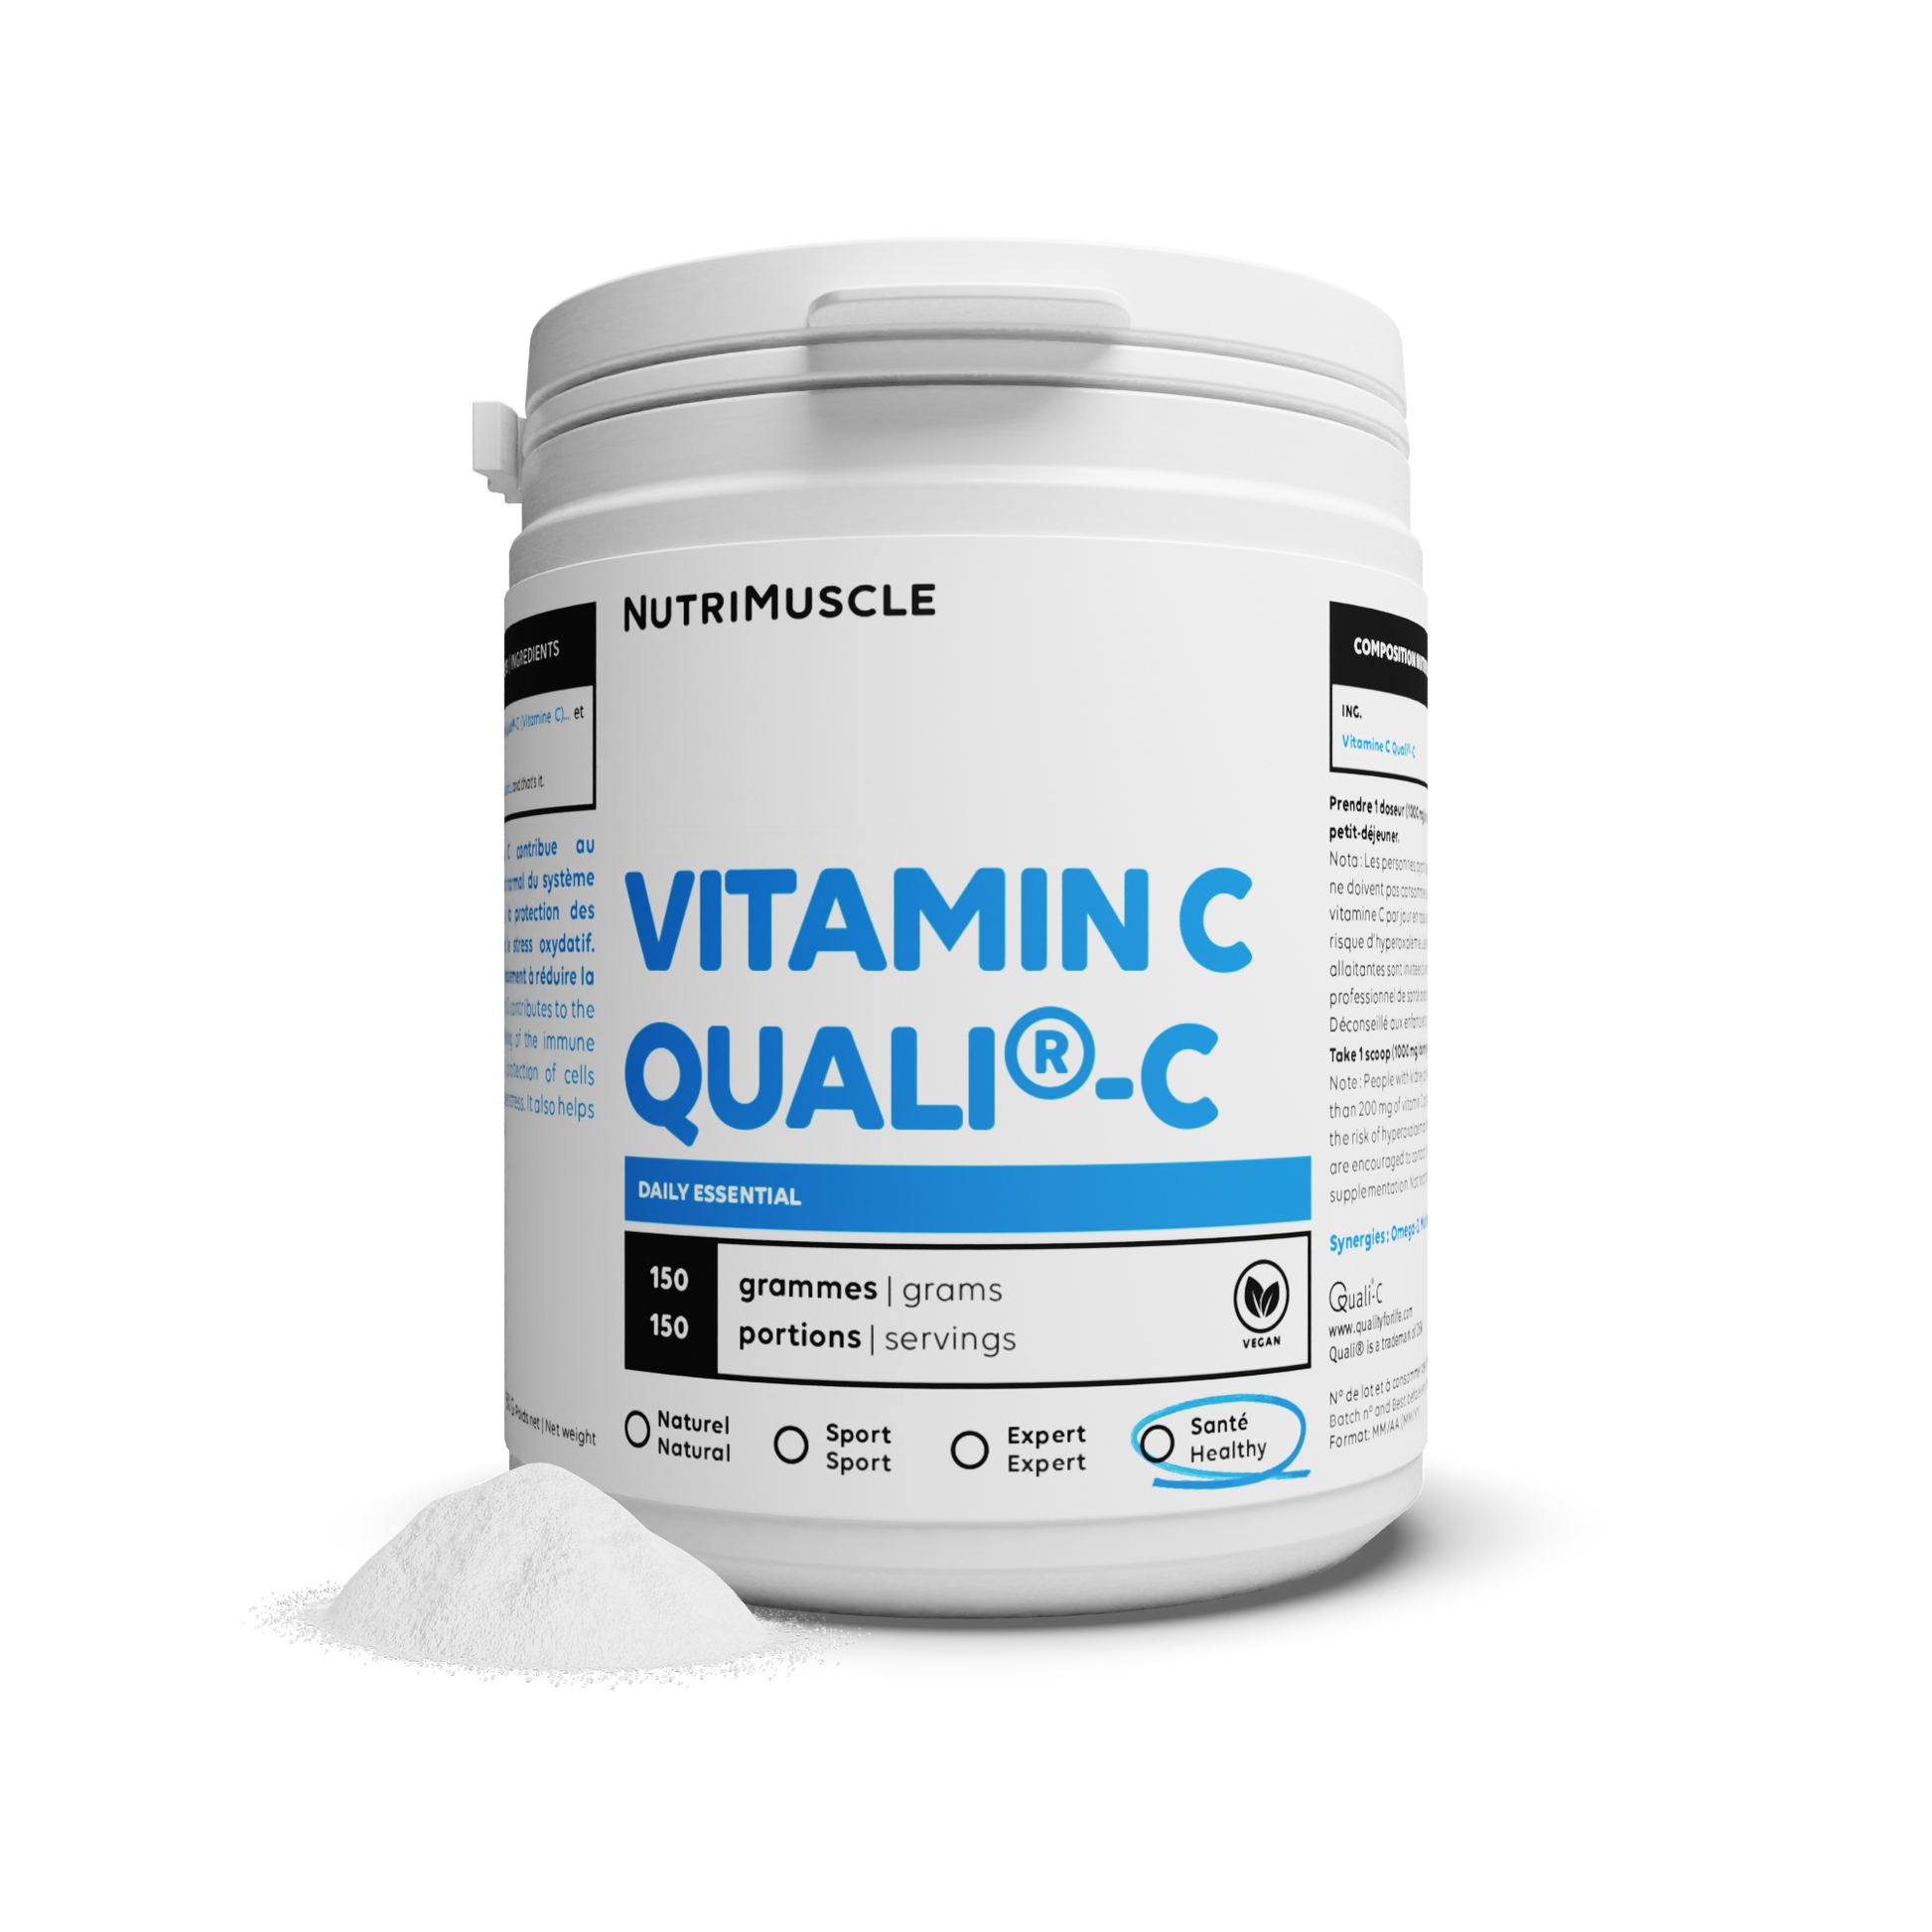 Vitamin C Quali®C powder